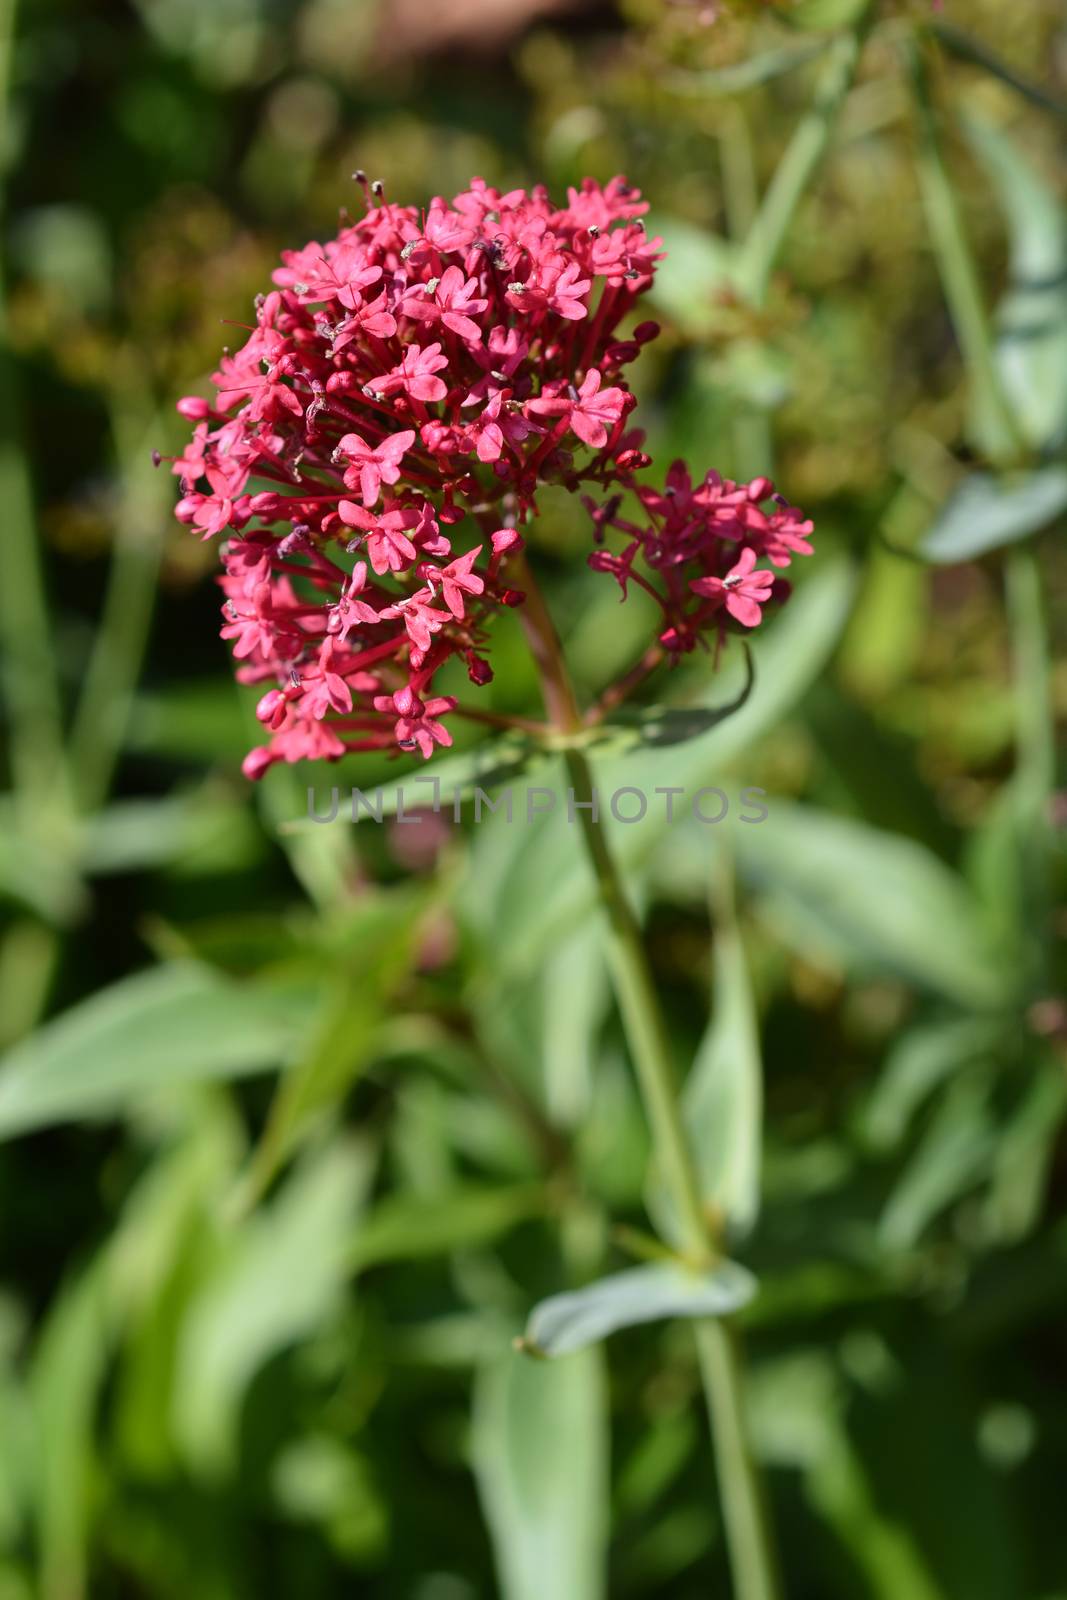 Red valerian - Latin name - Centranthus ruber